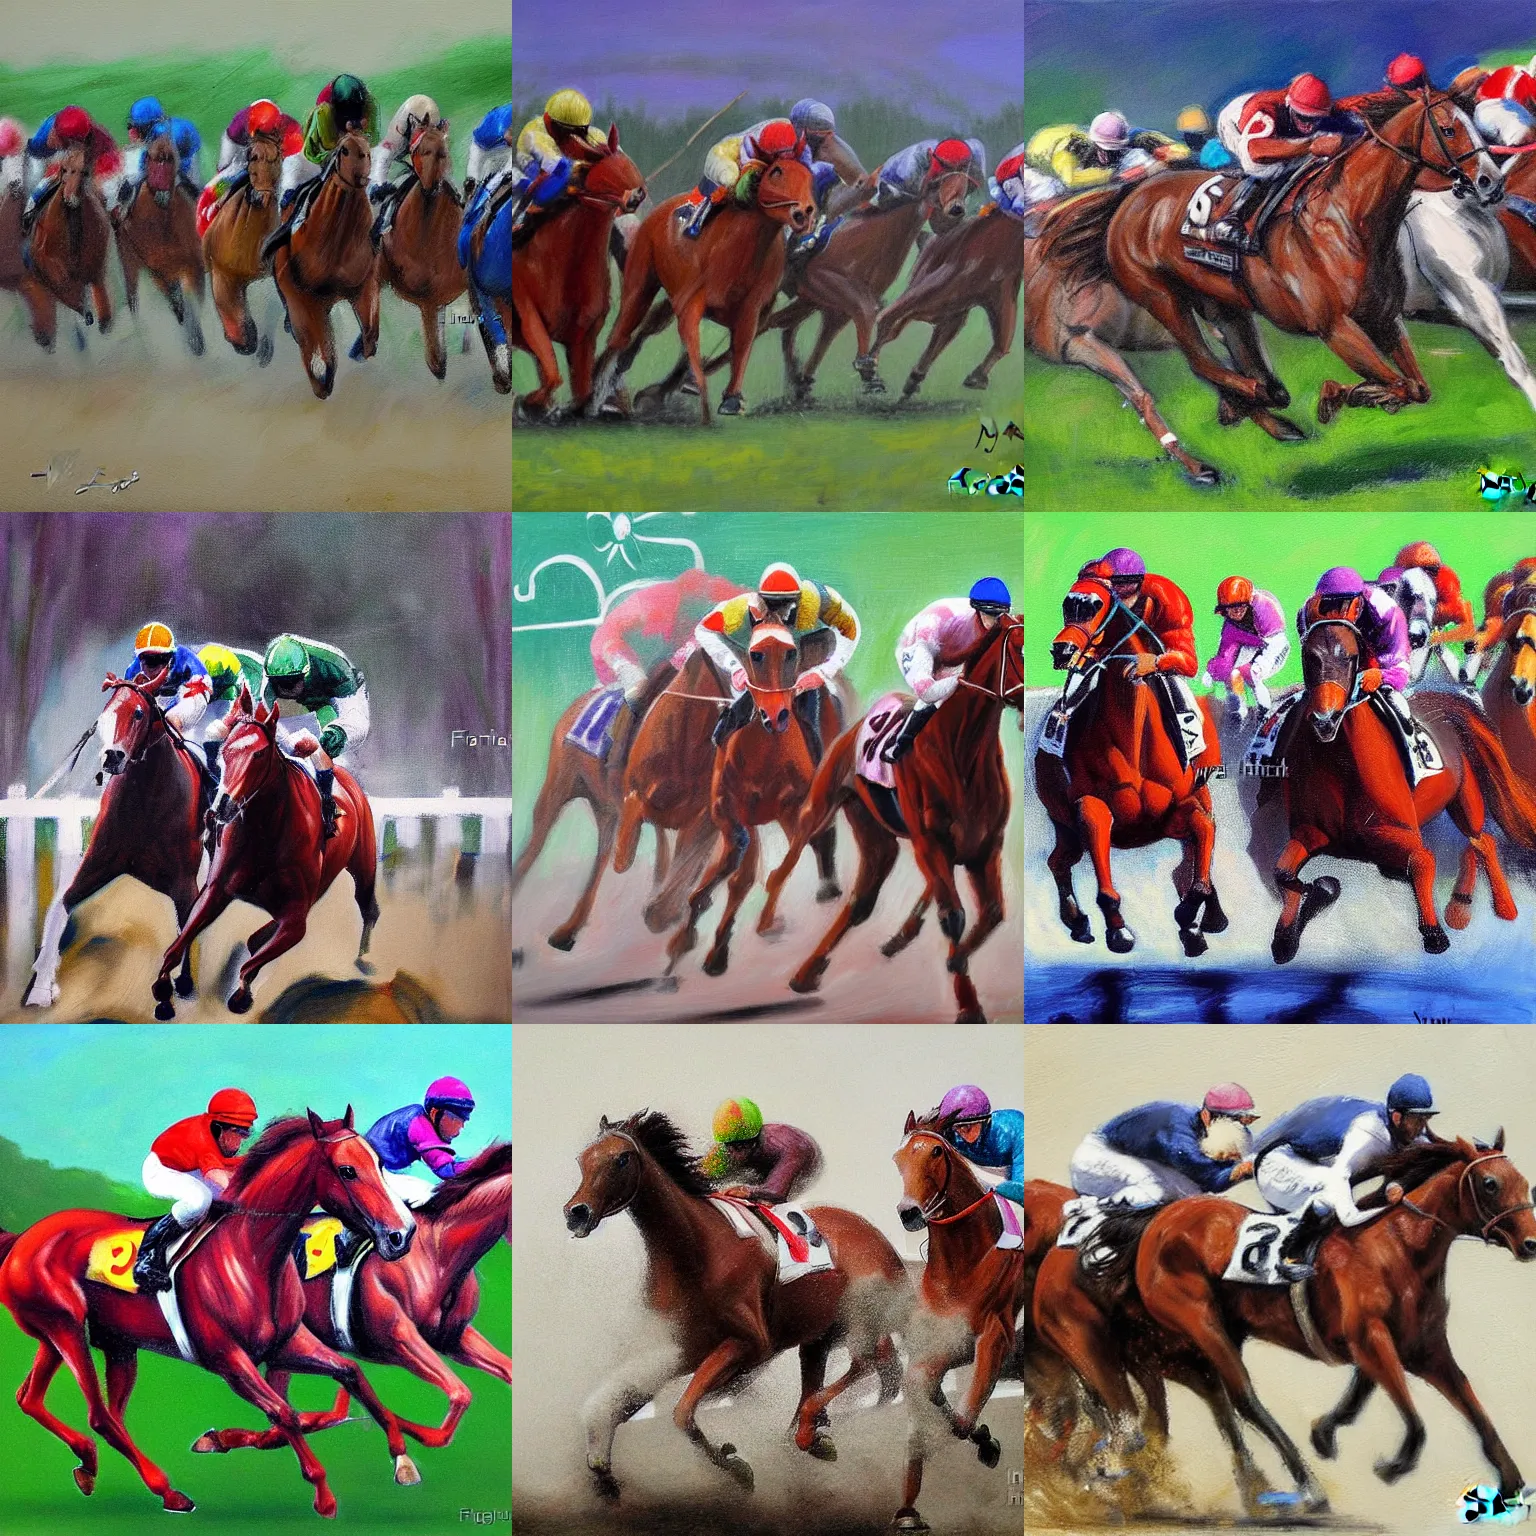 Prompt: horses racing, by flora yukhnovich